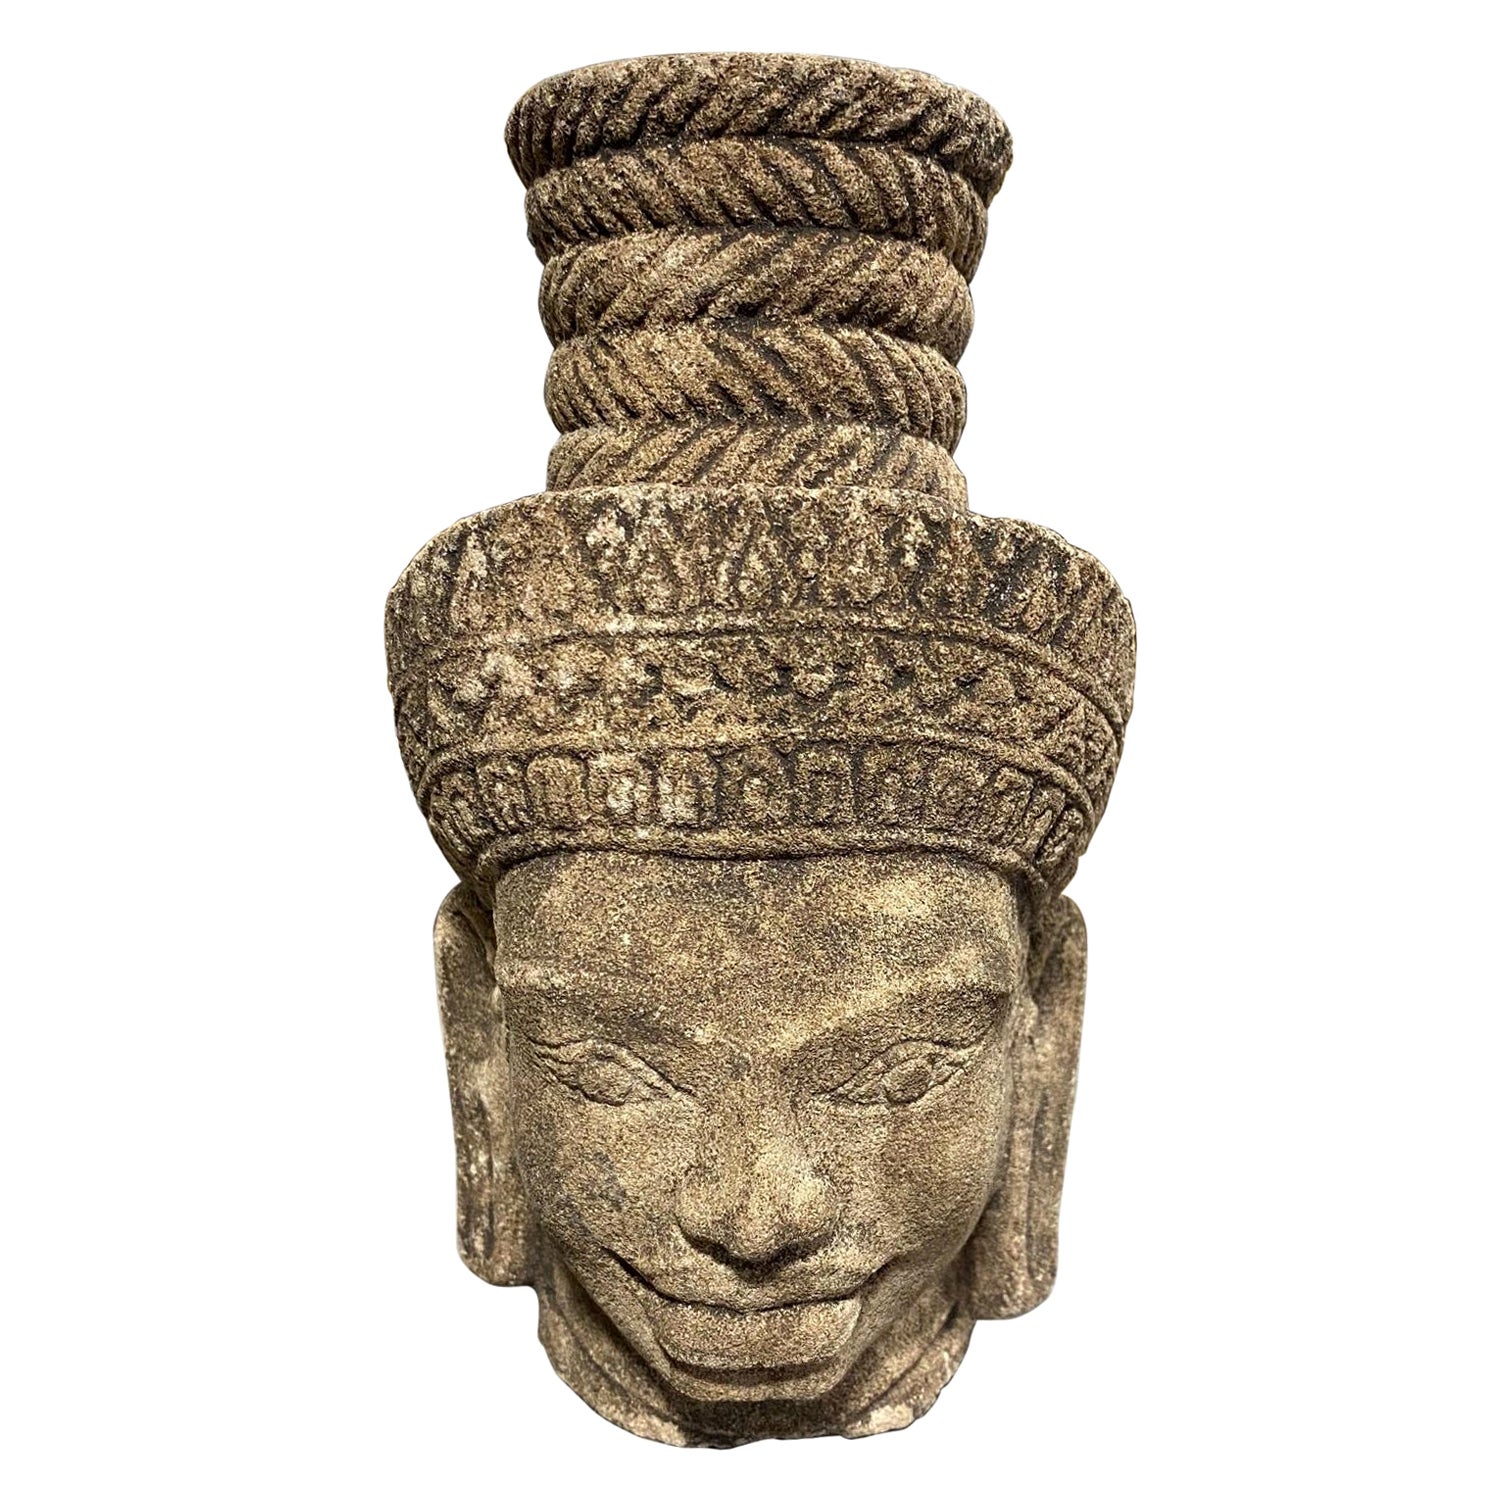 Asian Khmer Cambodia Stoned Carved Head Bust of Male Buddhist Buddha Shiva Deity